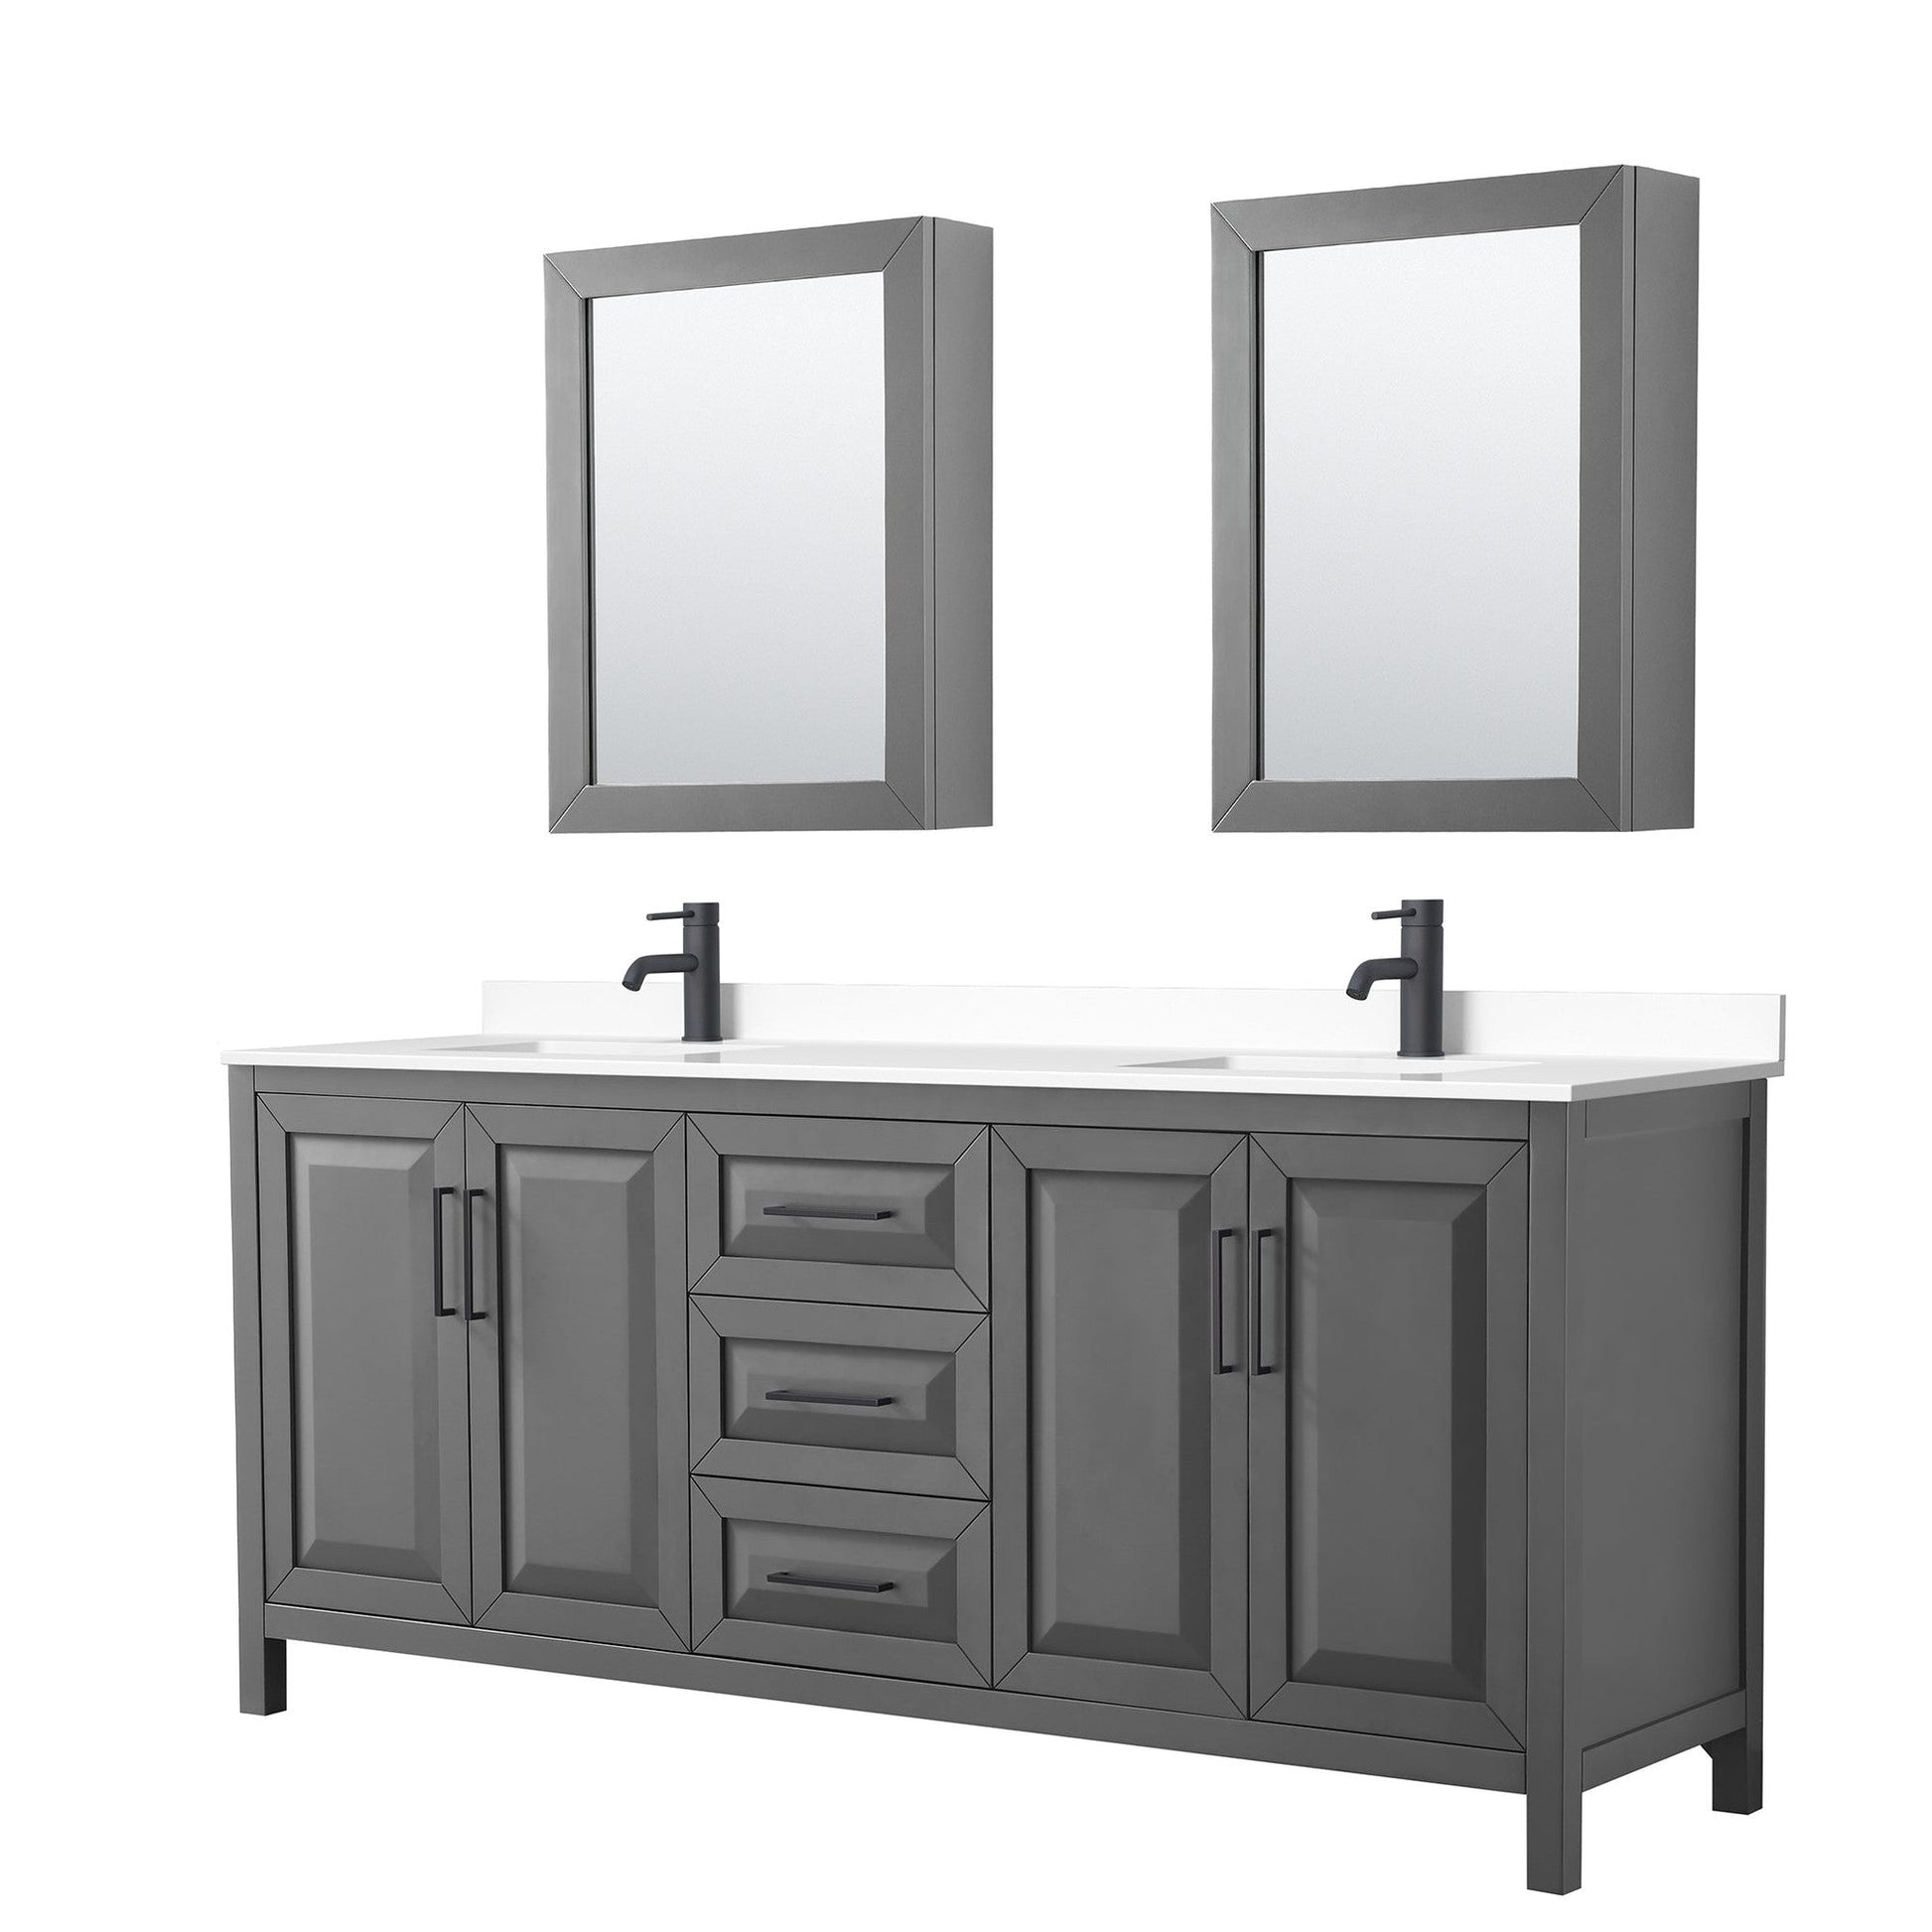 Daria 80" Double Bathroom Vanity in Dark Gray, White Cultured Marble Countertop, Undermount Square Sinks, Matte Black Trim, Medicine Cabinets